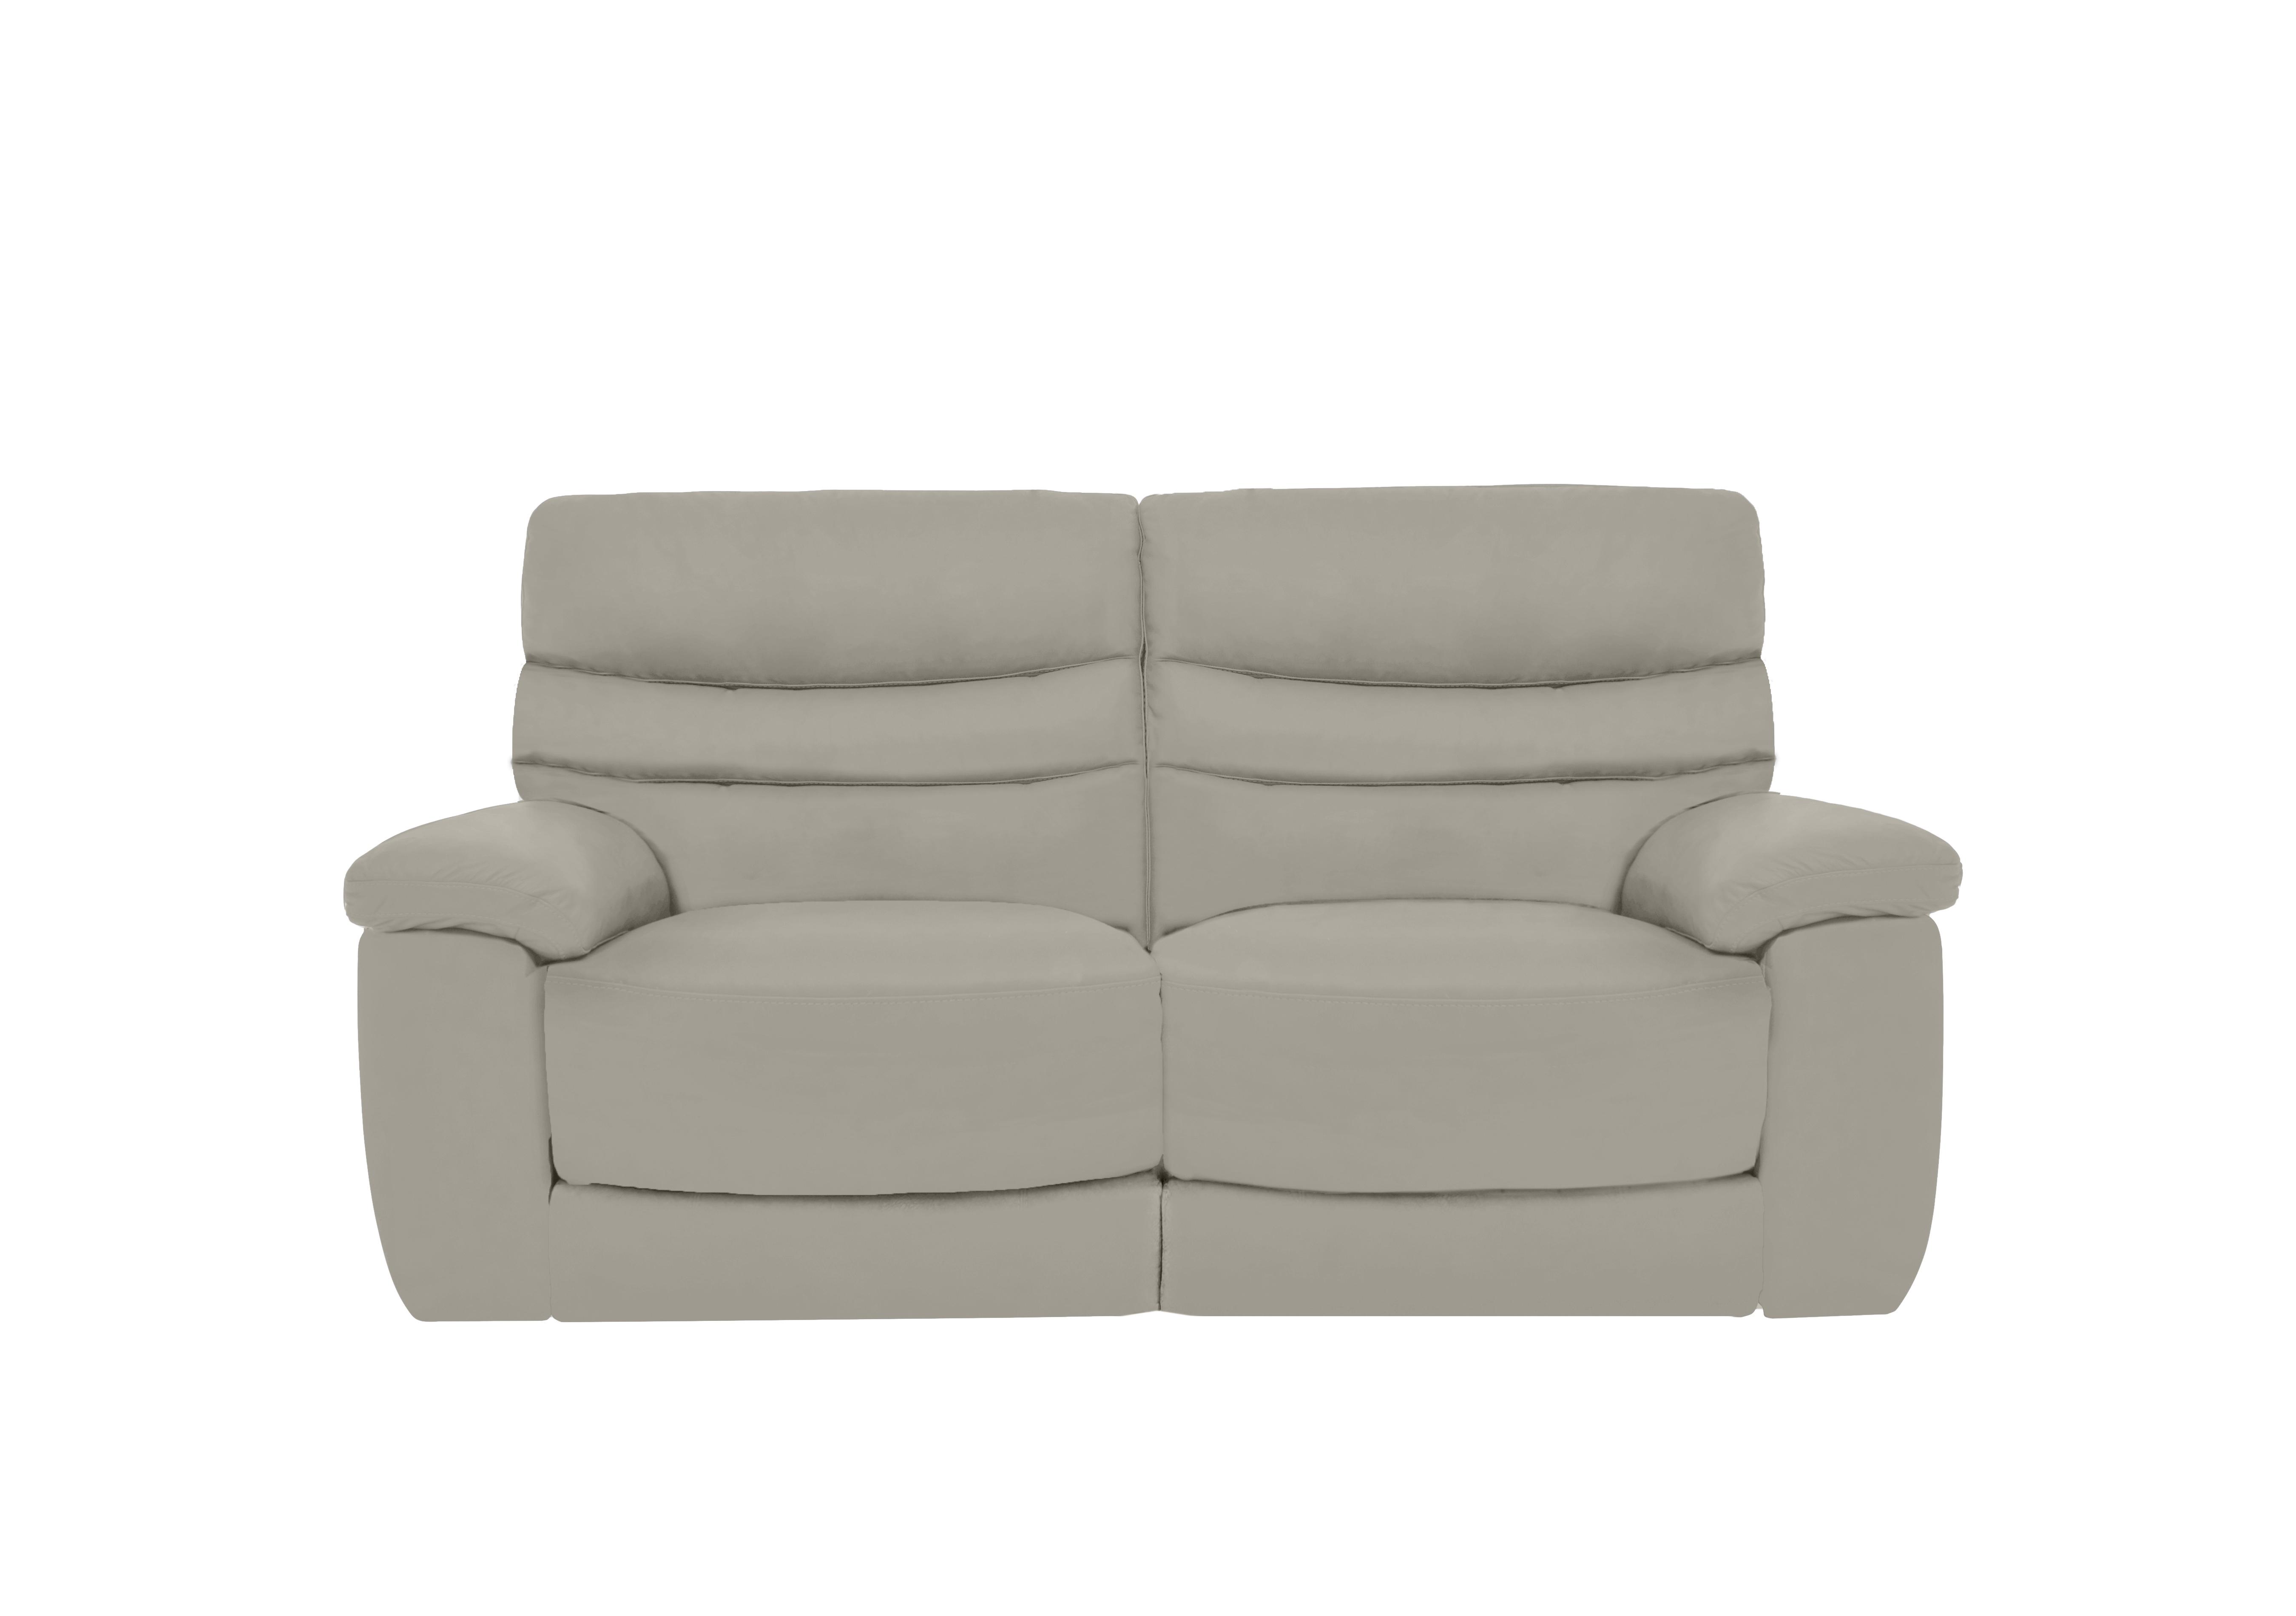 Nimbus 2 Seater Leather Sofa in Bx-251e Grey on Furniture Village